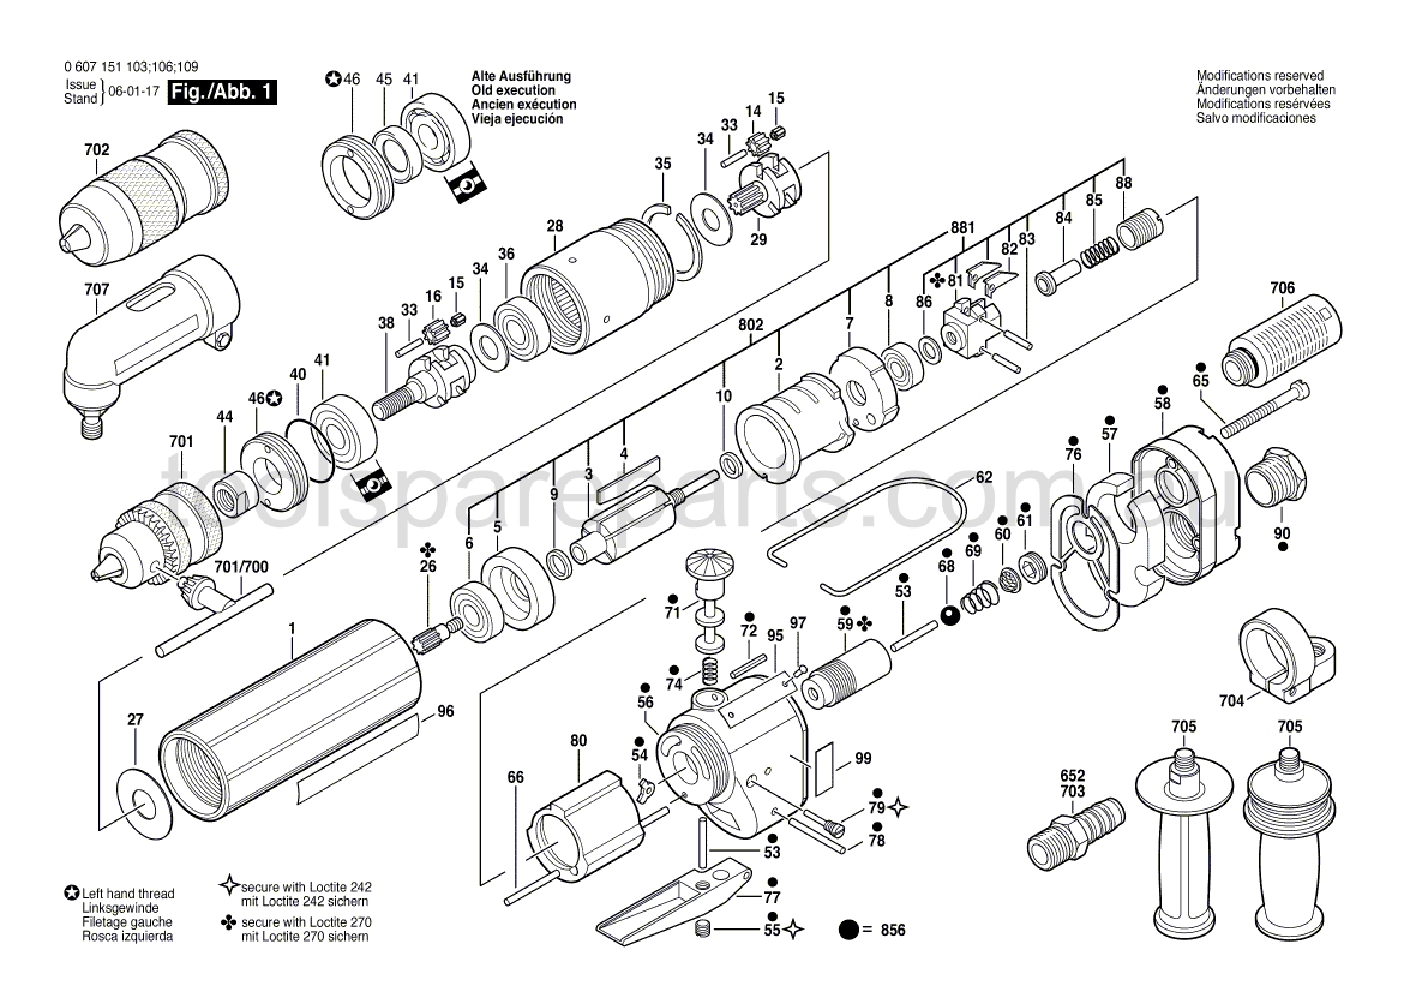 Bosch 370 WATT-SERIE 0607151106  Diagram 1